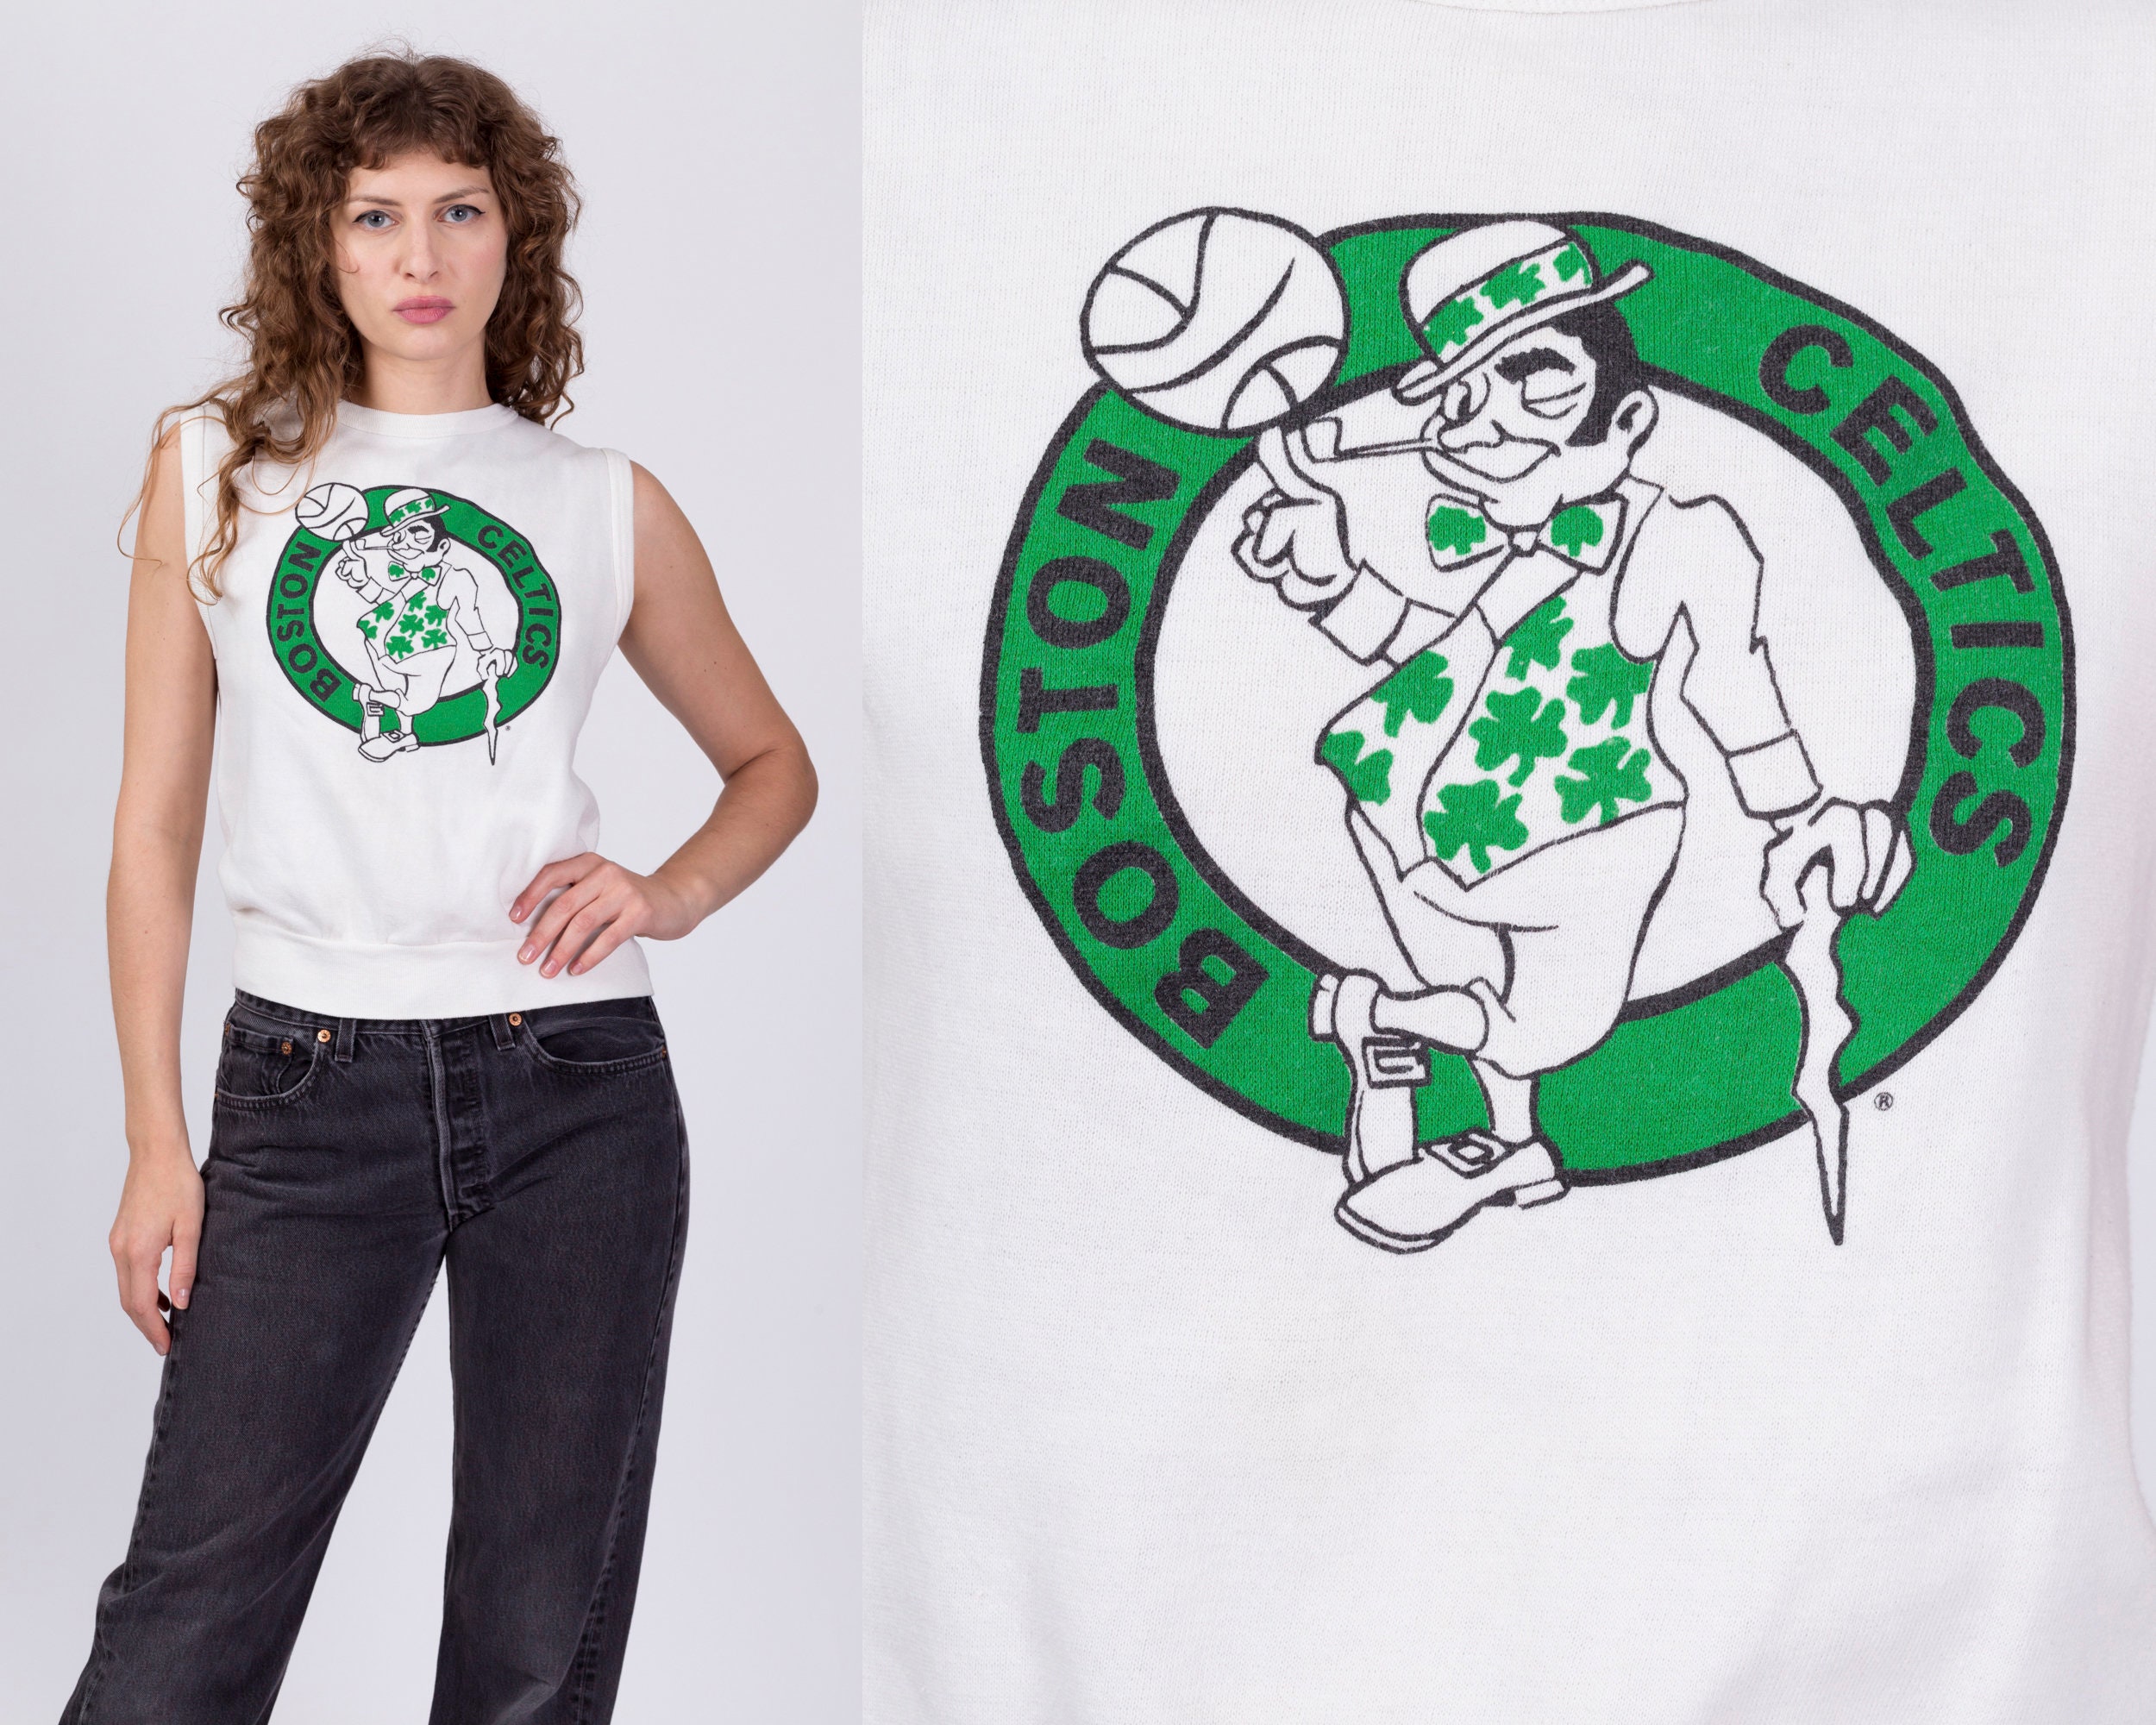 Sparky Jaylen Brown Boston Celtics Vintage Organic cotton T-shirt